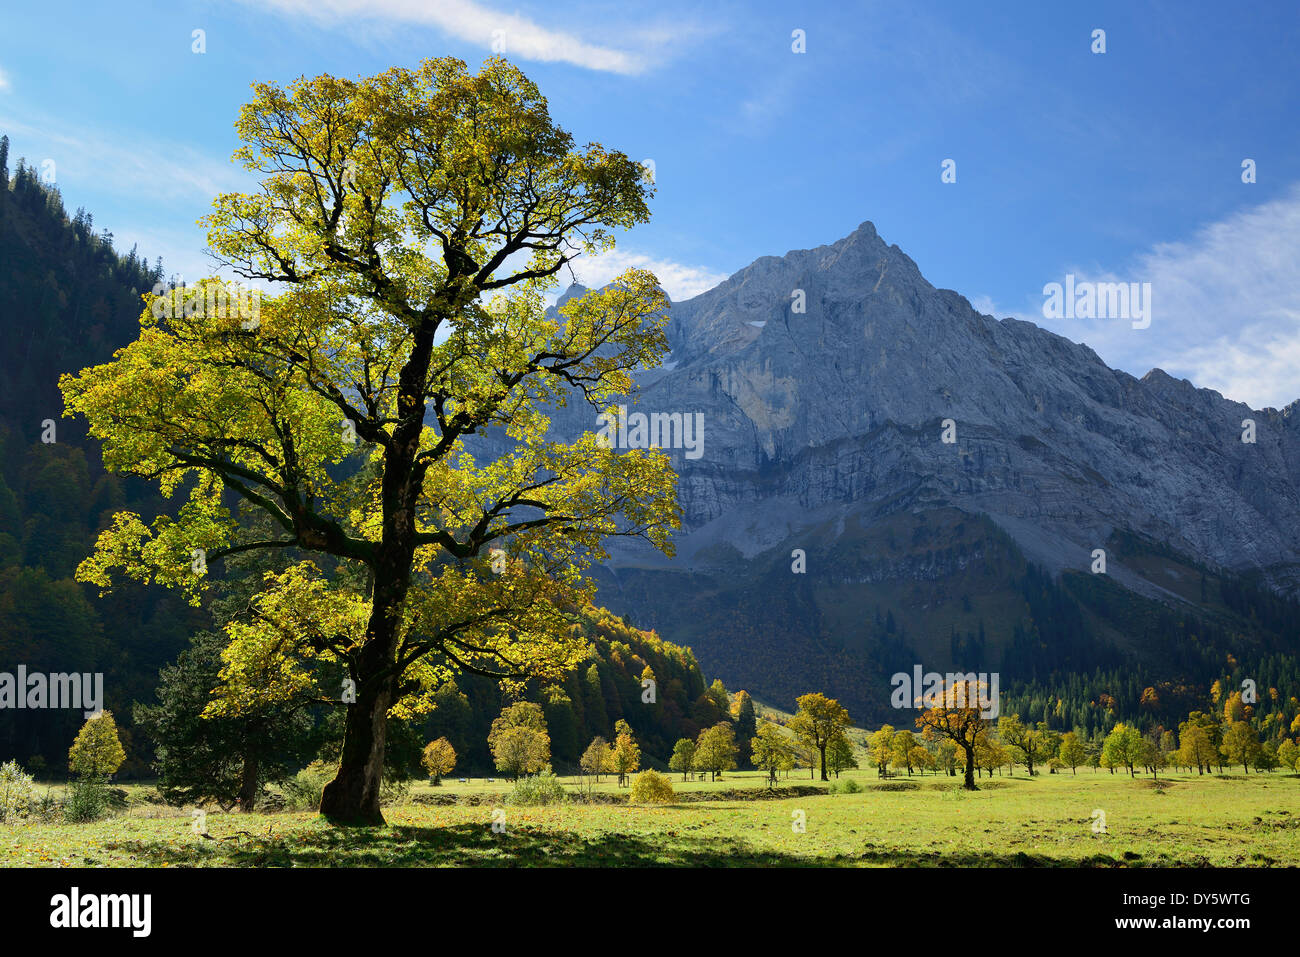 Sycamore maple in autumn colors with Spritzkarspitze, Grosser Ahornboden, Eng, Karwendel range, Tyrol, Austria Stock Photo